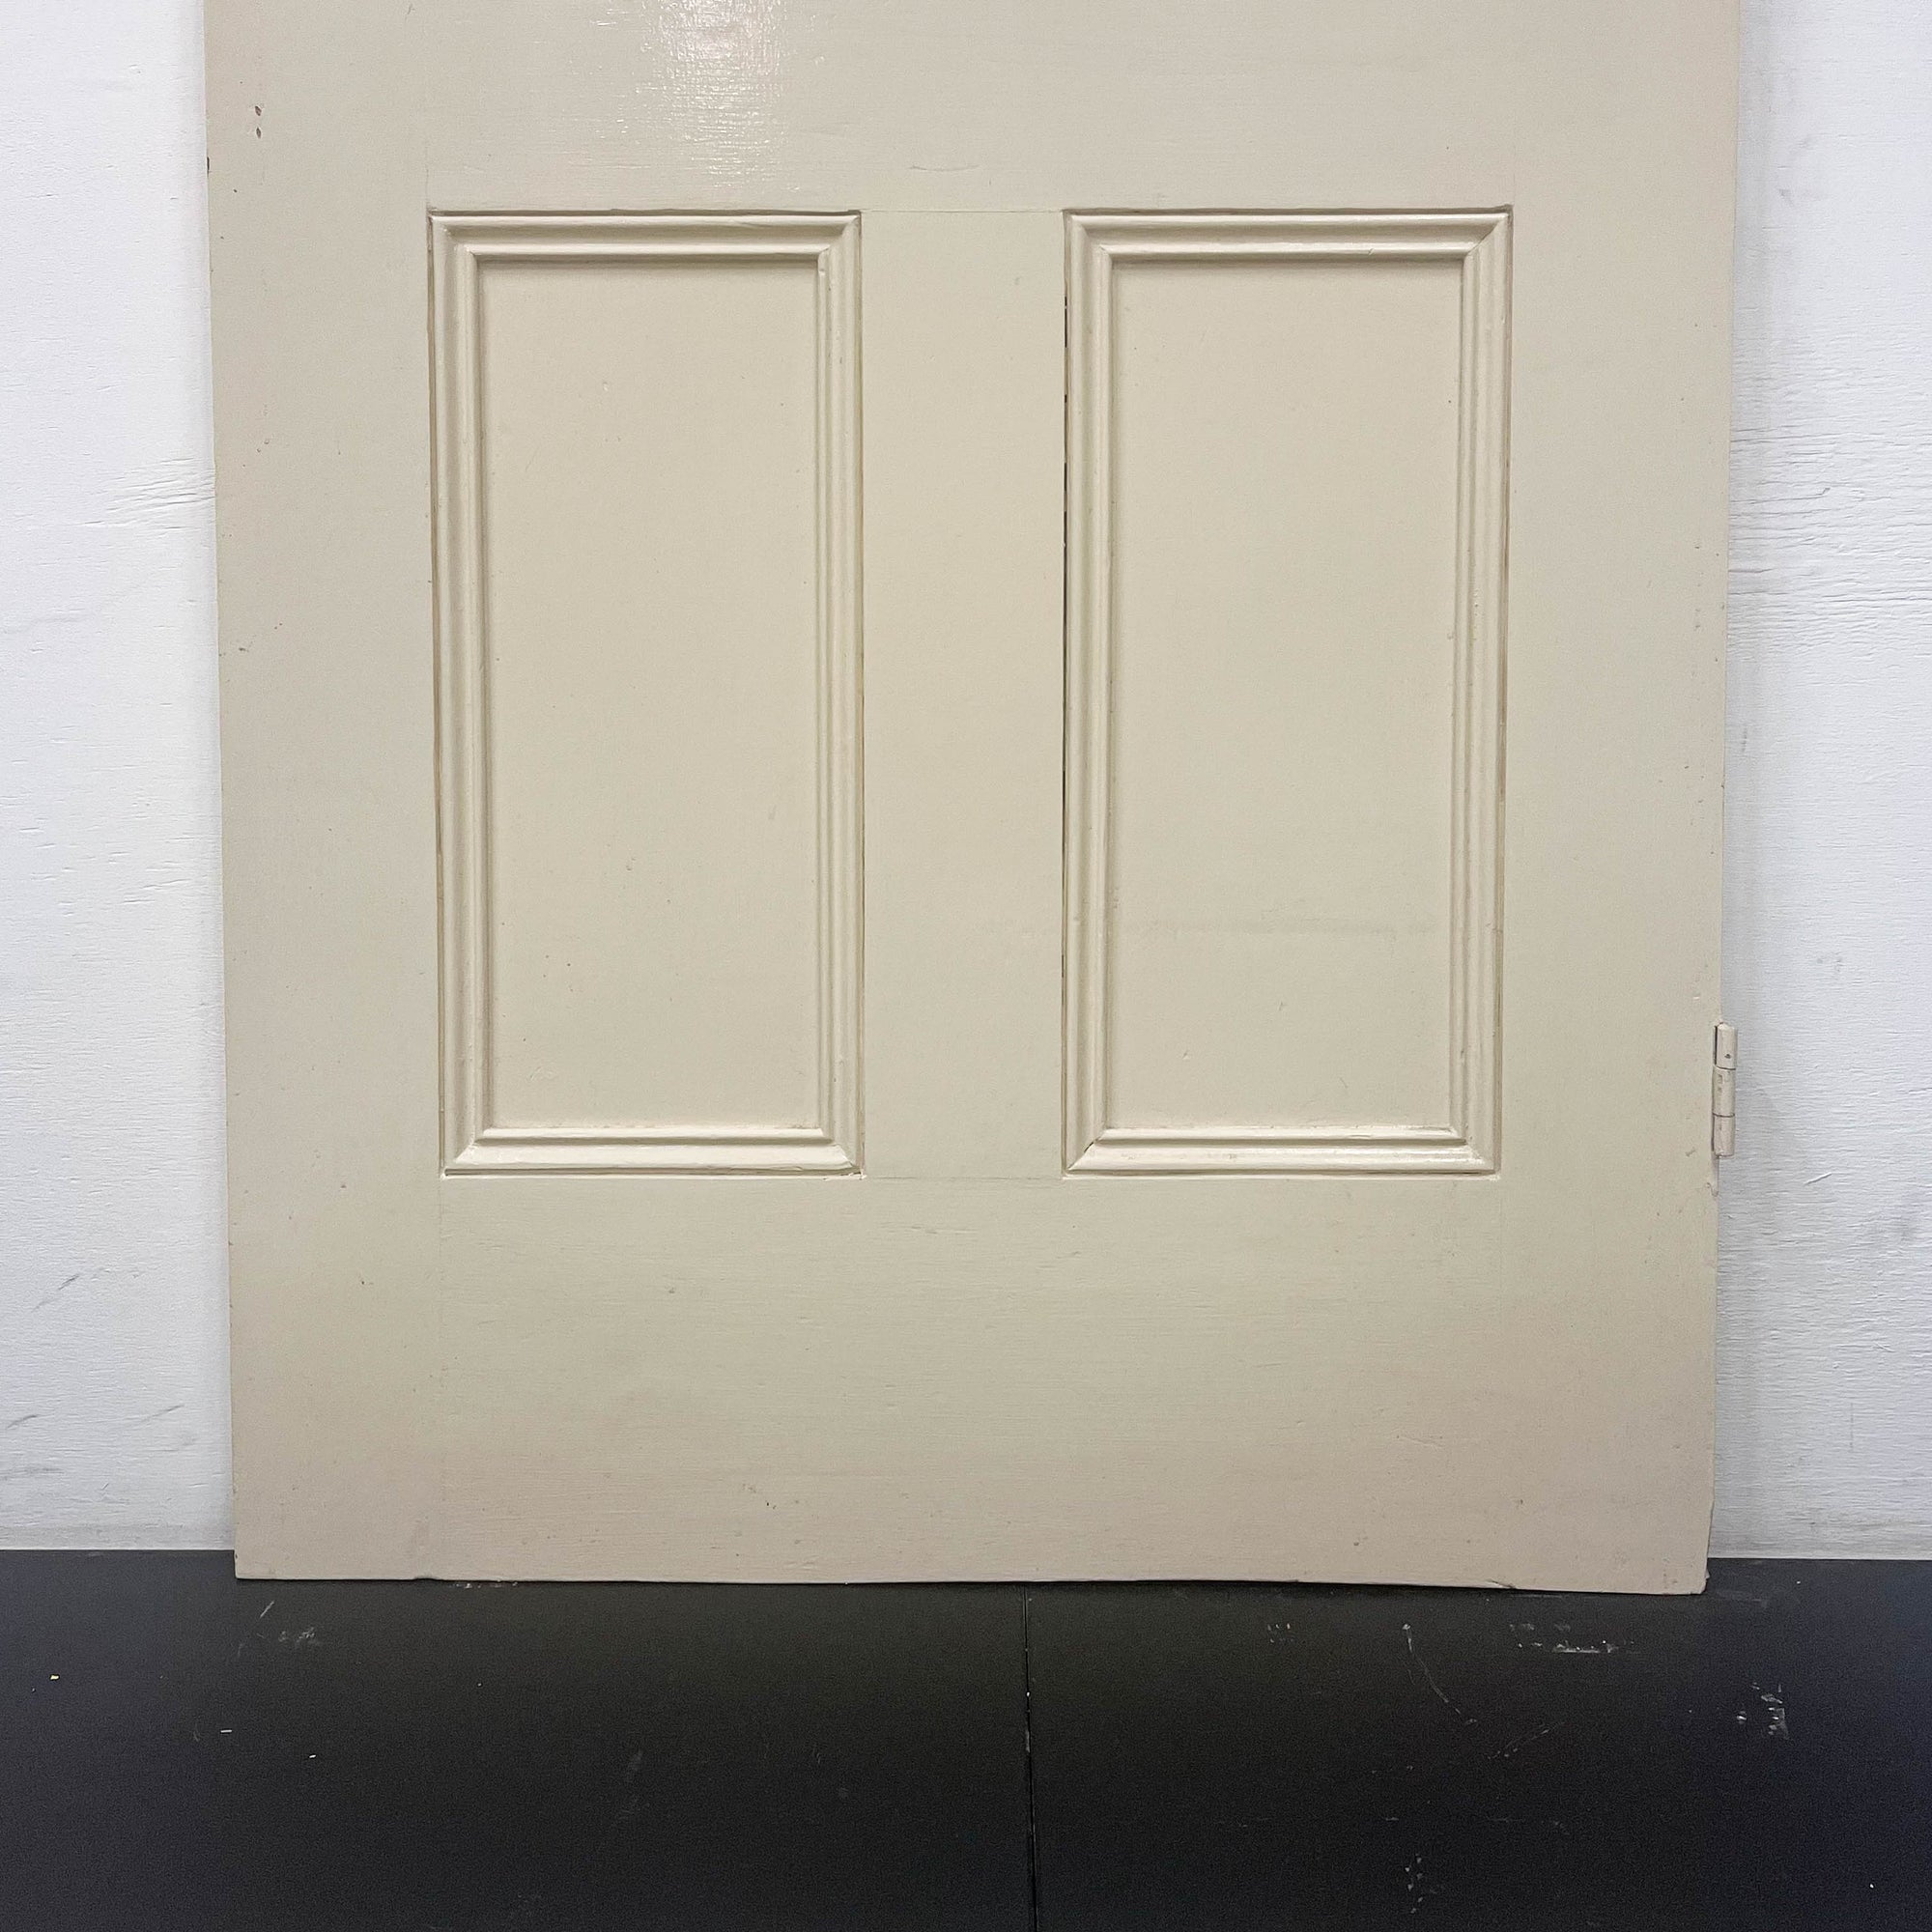 Antique 2 Panel Victorian Glazed Door - 196.5cm x 75.5cm | The Architectural Forum